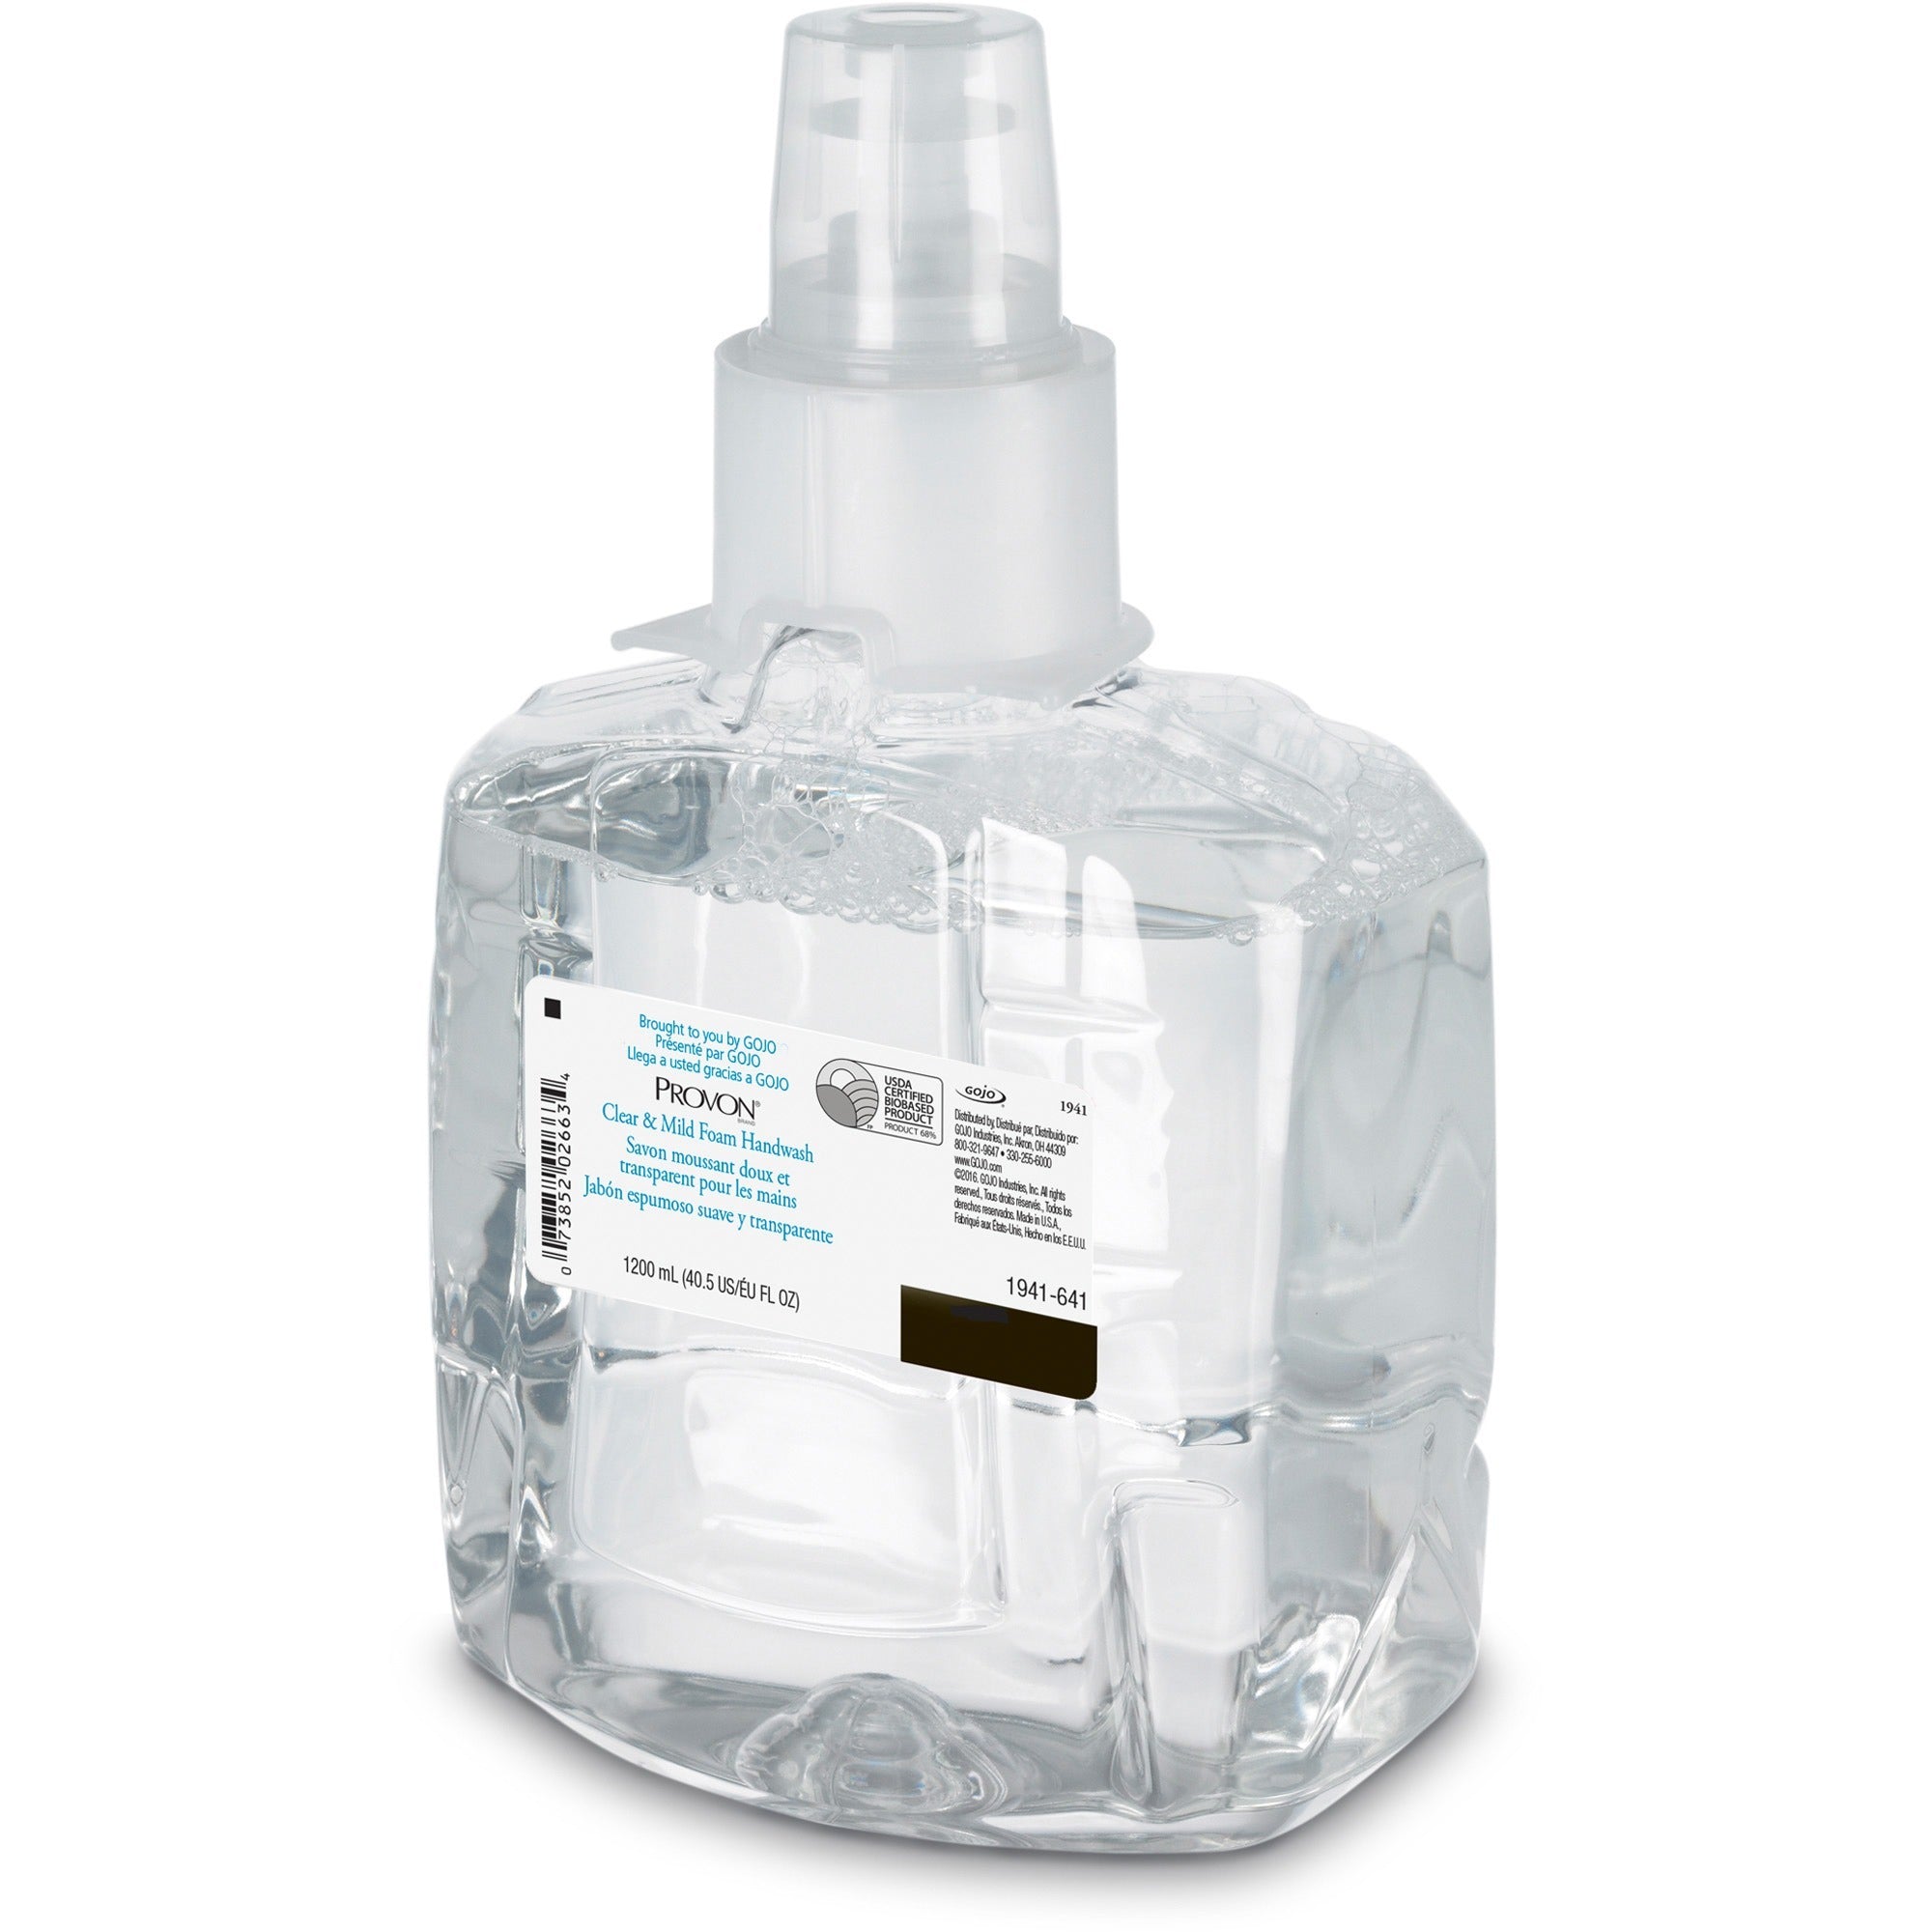 provon-ltx-12-refill-clear-&-mild-foam-handwash-406-fl-oz-1200-ml-pump-bottle-dispenser-kill-germs-skin-hand-moisturizing-clear-rich-lather-fragrance-free-dye-free-2-carton_goj194102ct - 2